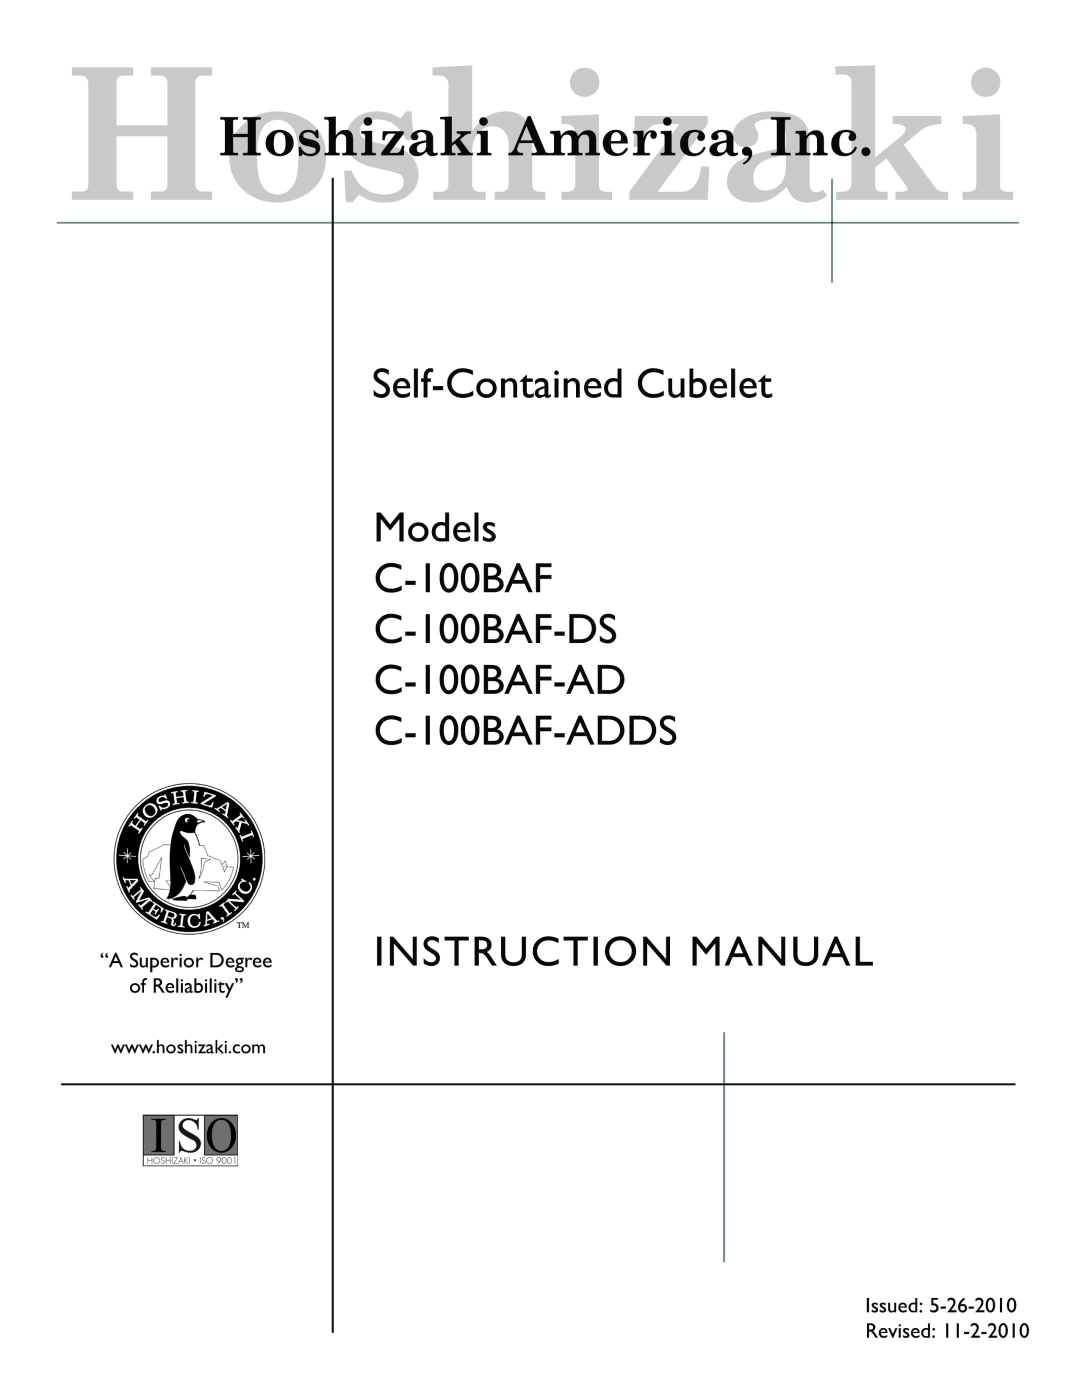 Hoshizaki instruction manual Self-Contained Cubelet Models C-100BAF C-100BAF-DS C-100BAF-AD, C-100BAF-ADDS 